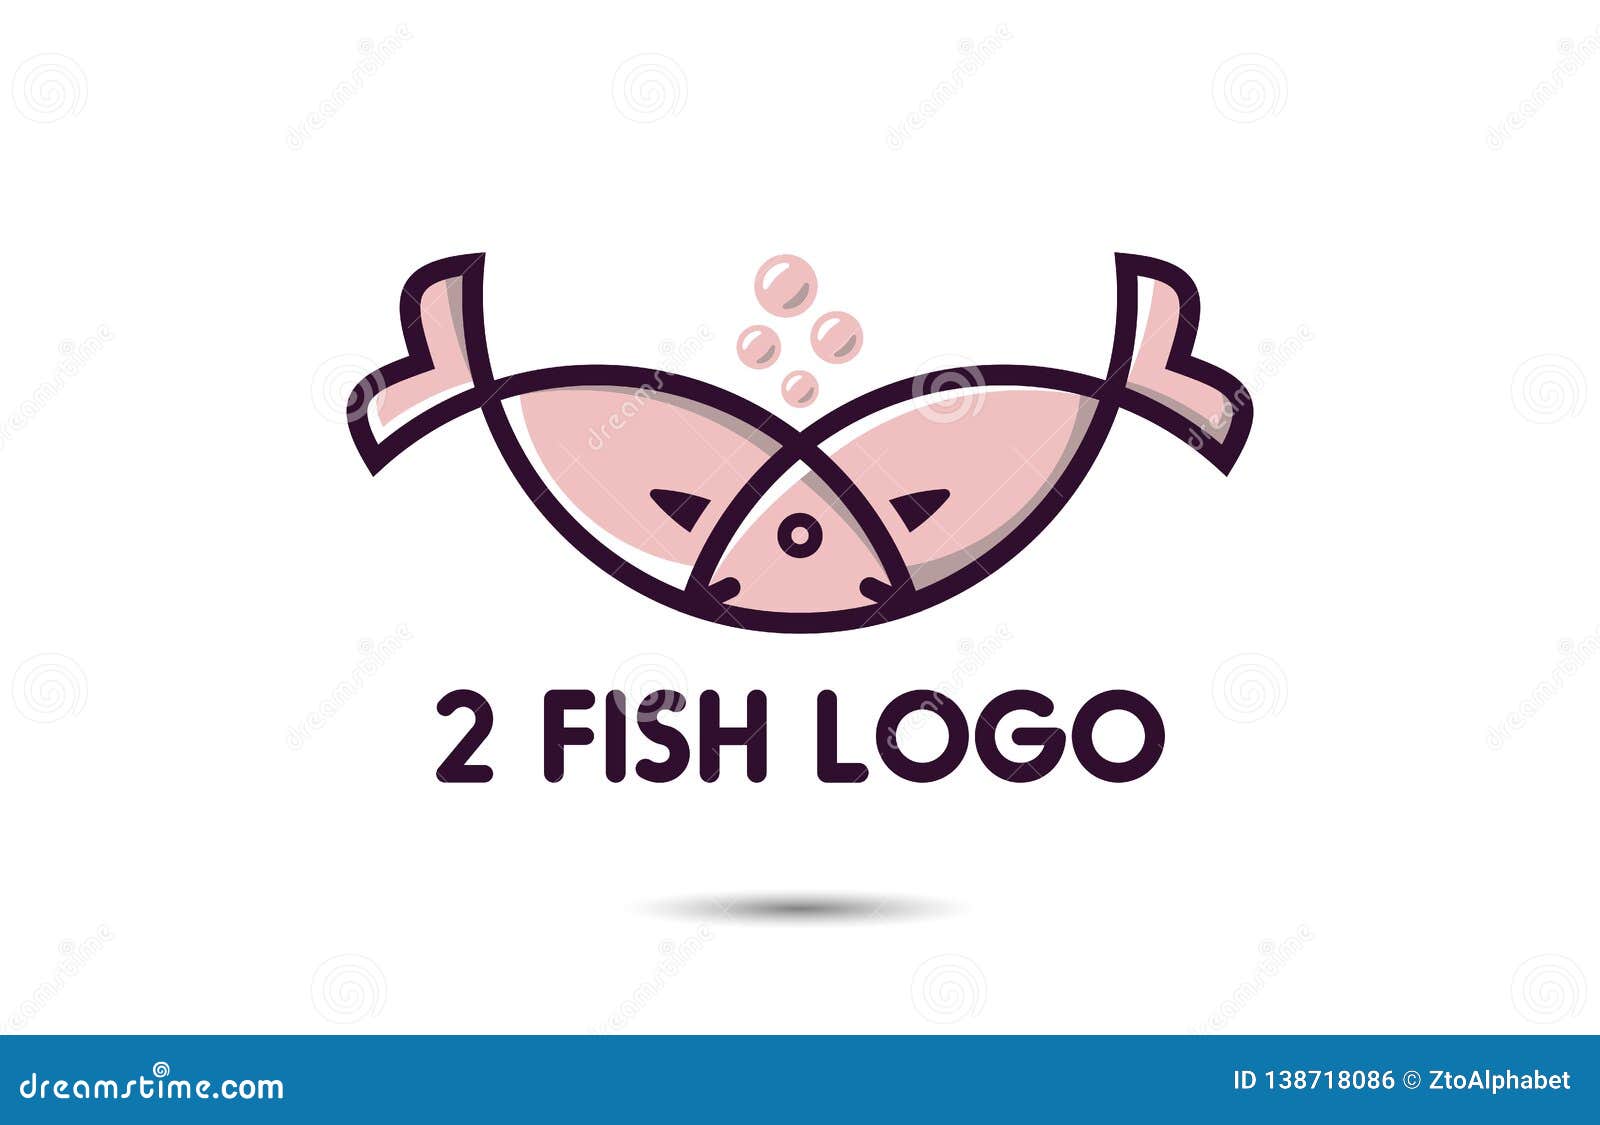 Double Fish Logo Illustration. Stock Vector - Illustration of financial,  great: 138973057, double fish logo